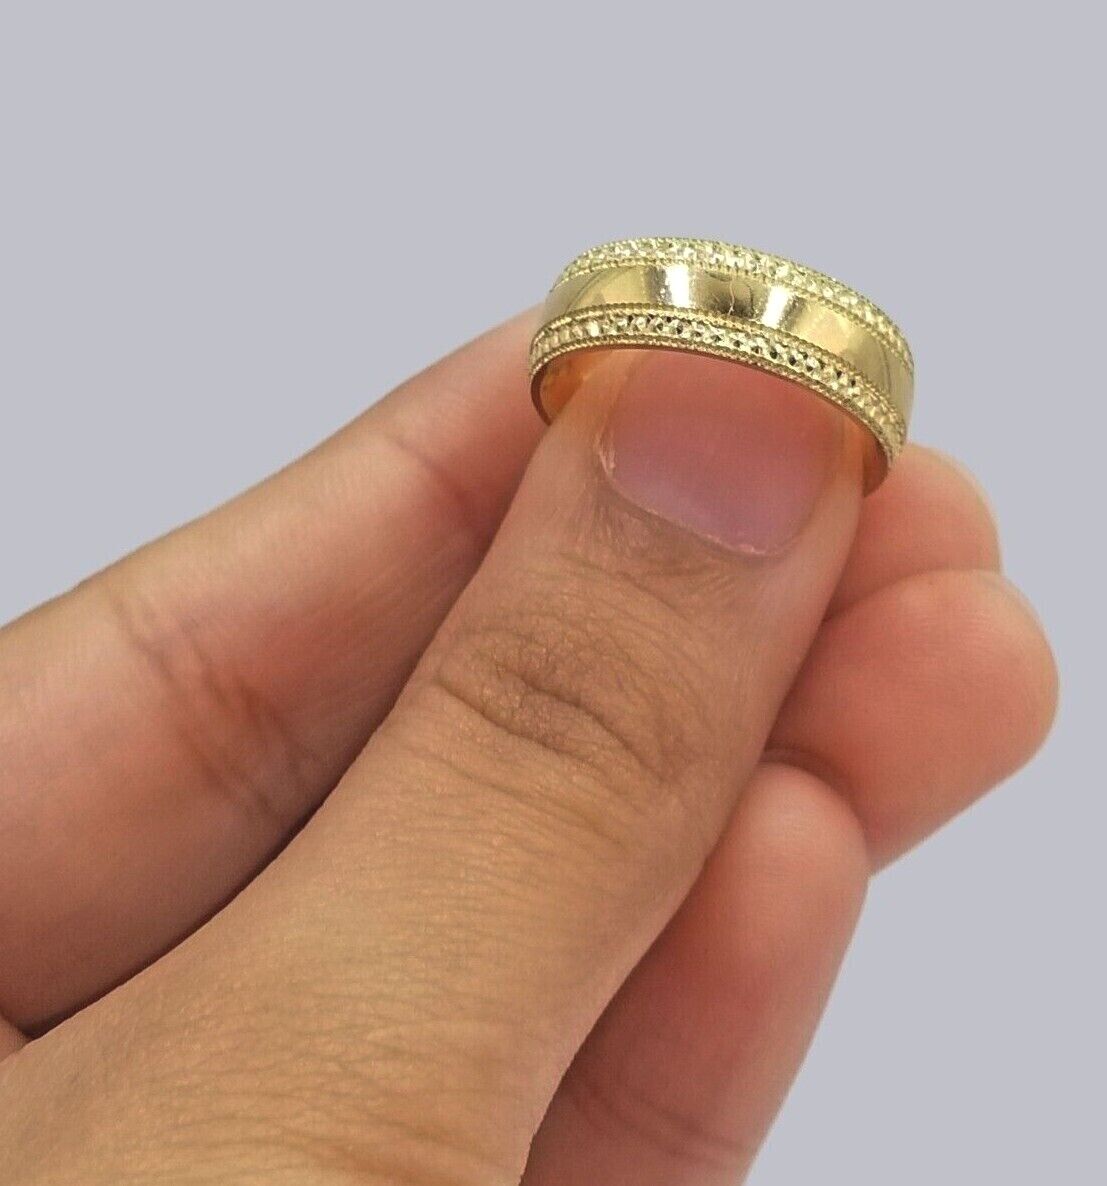 Unique 24K Yellow Gold Open Design Dragon Ring Size 10 | eBay